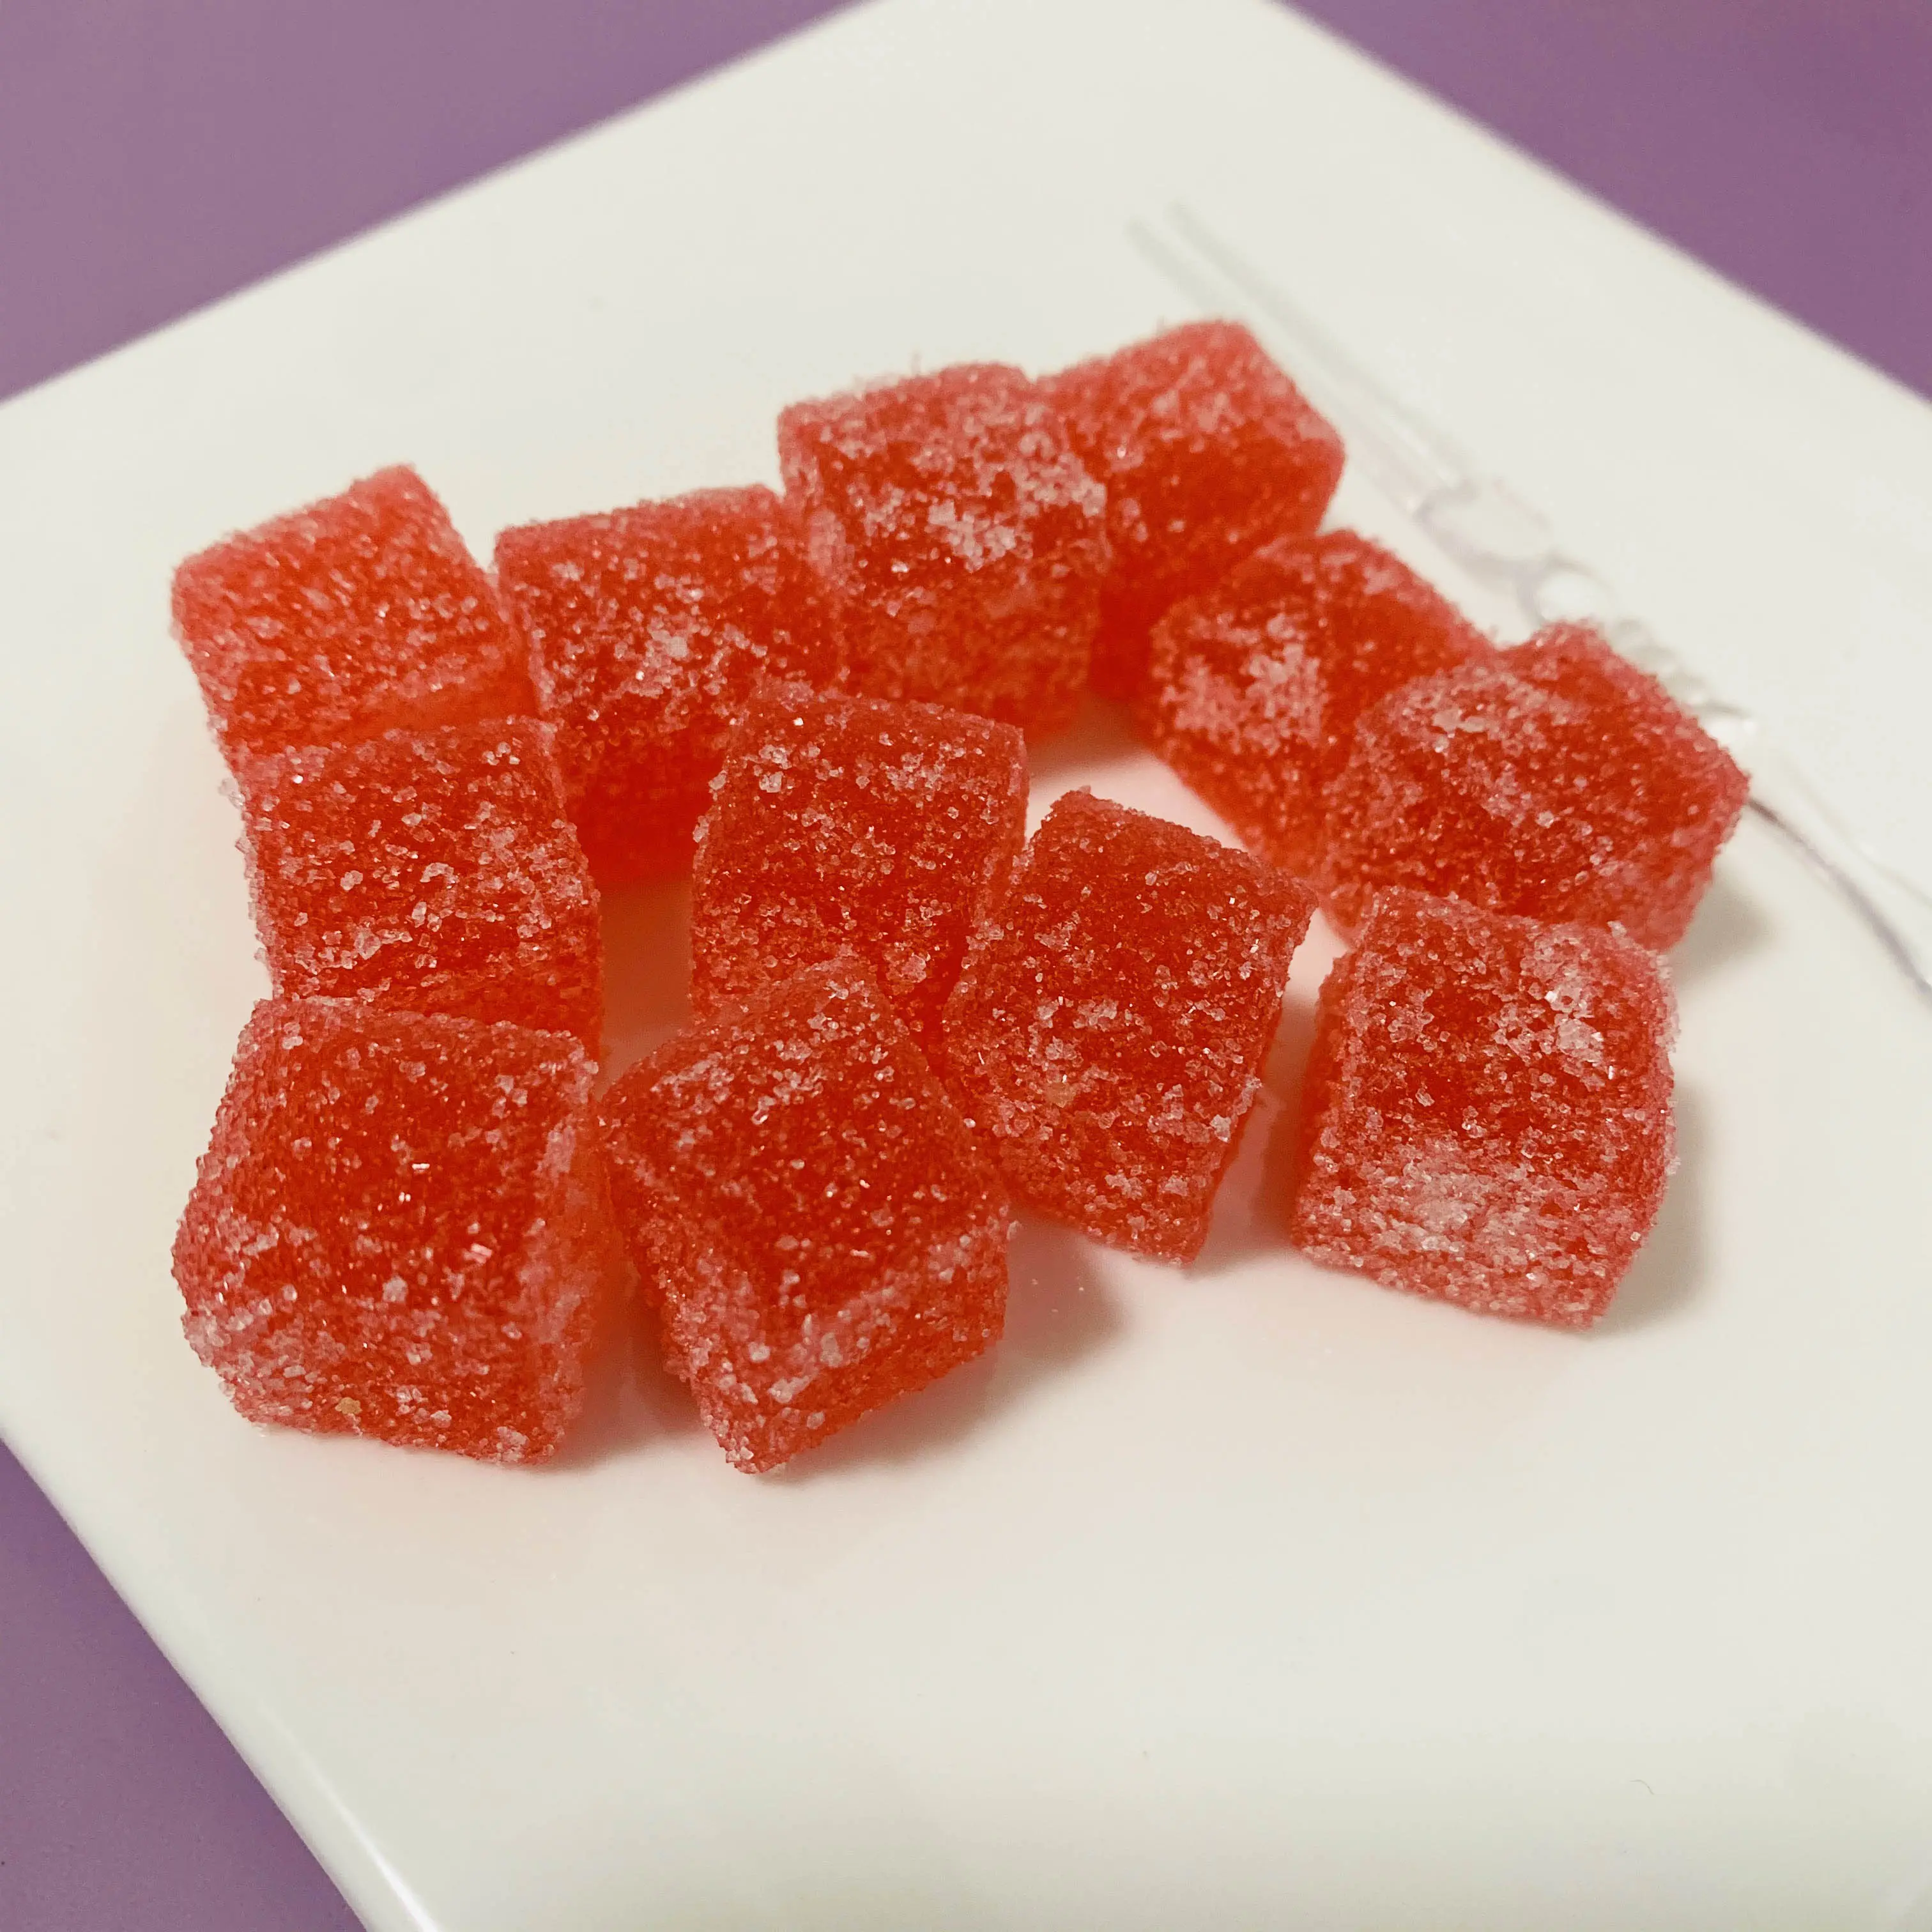 Factory Direct Supply Fruchtige Soft Candy Zucker beschichtete Erdbeer geschmack Soft Gummy Candy Casual Sweet Snacks